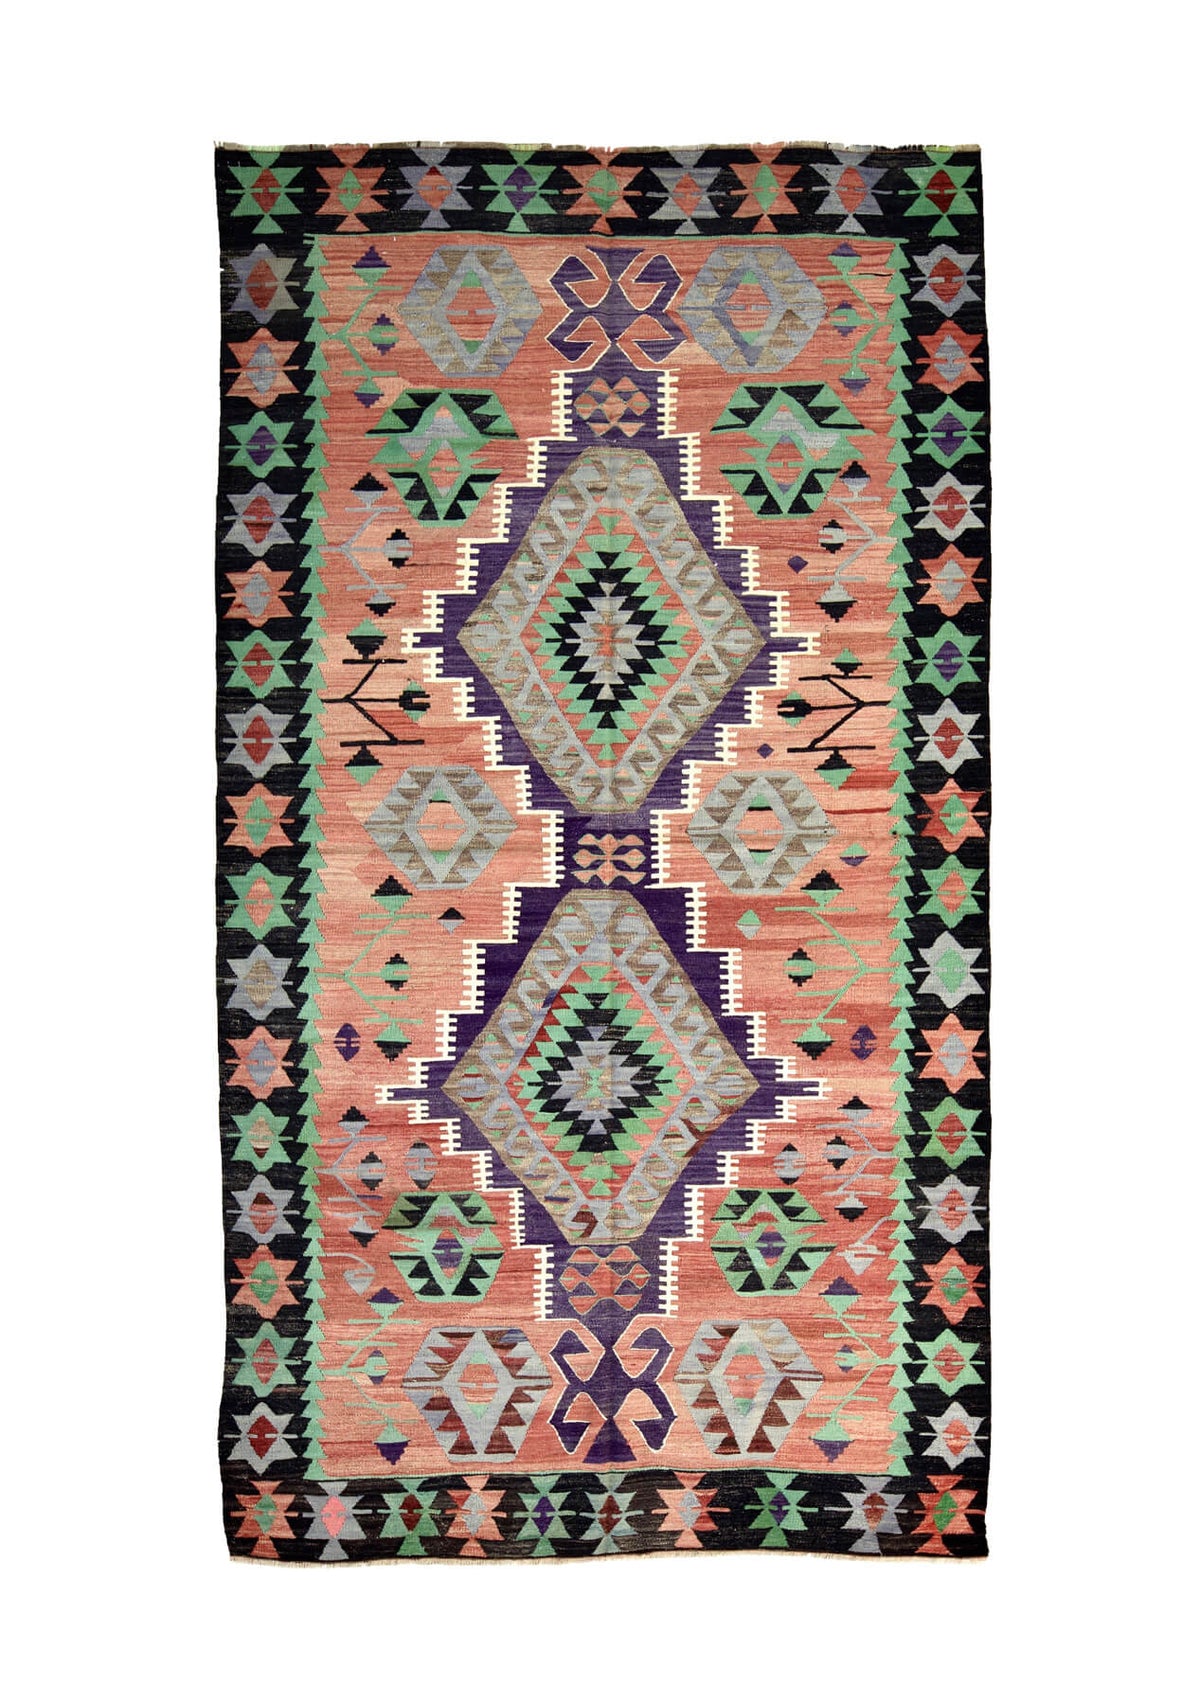 3'x4' Handmade Turkish Flat Woven Kilim Rug ChicagoCozy Rugs Chicago